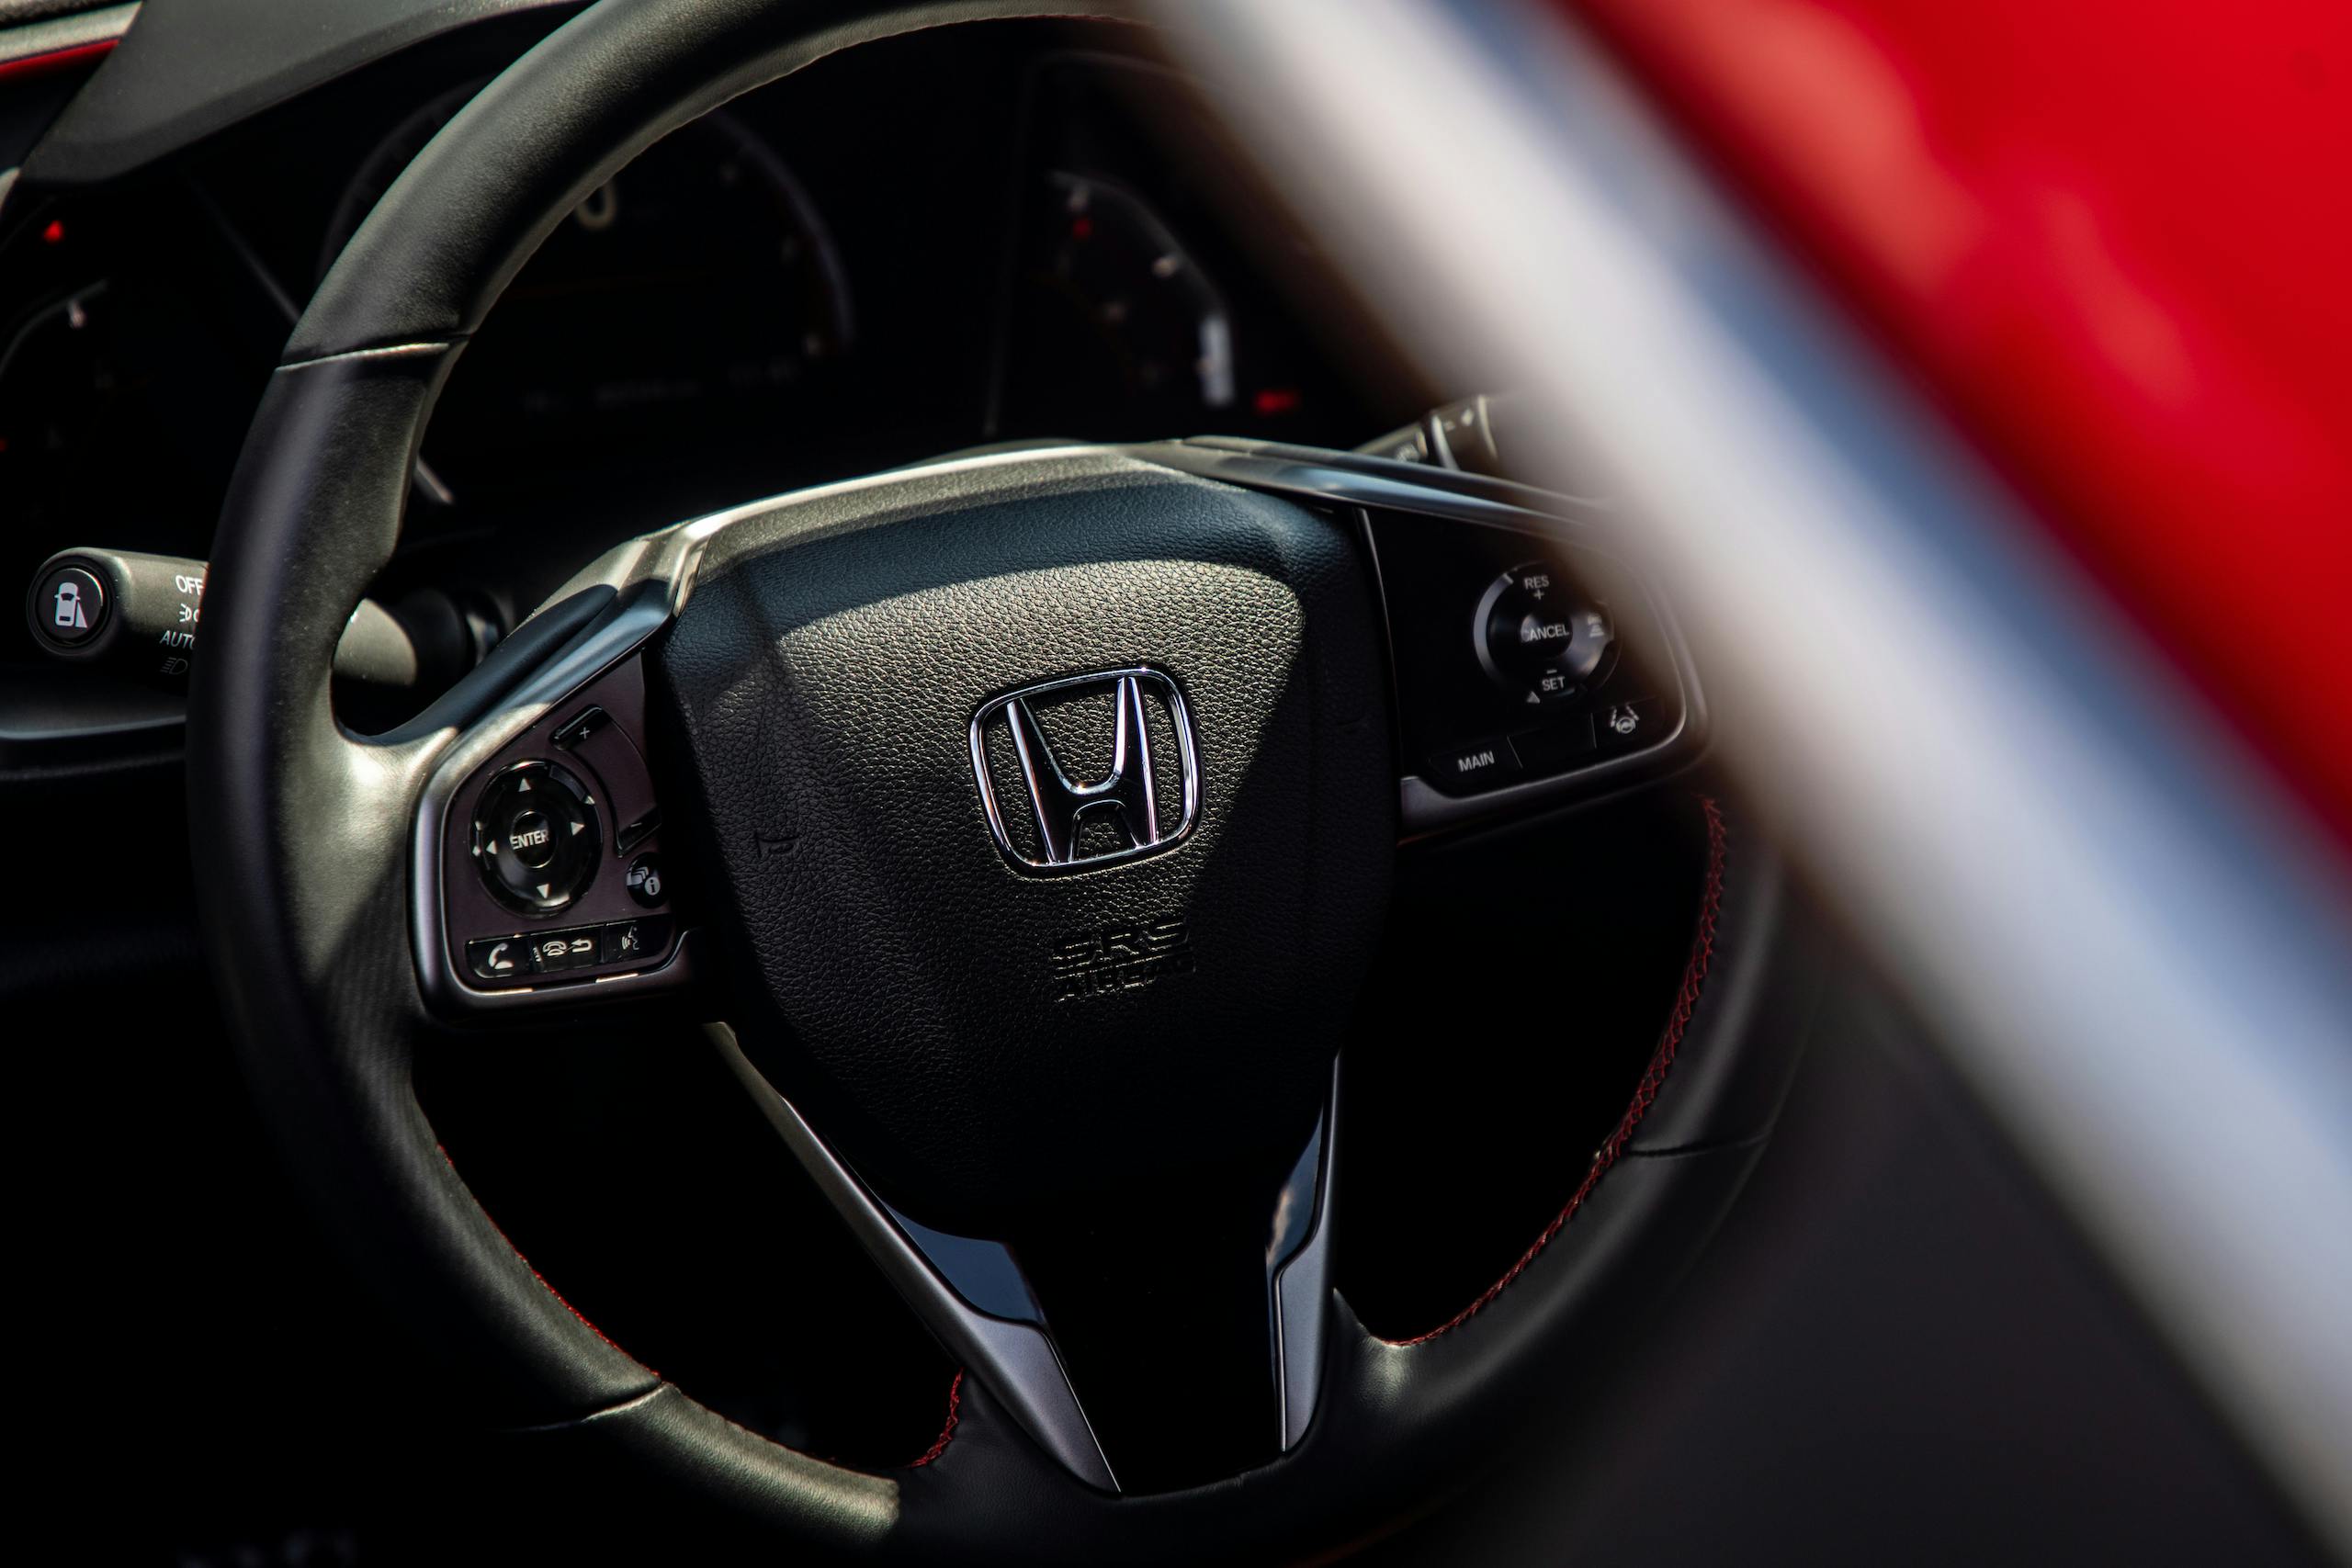 2020 Civic Si interior steering wheel